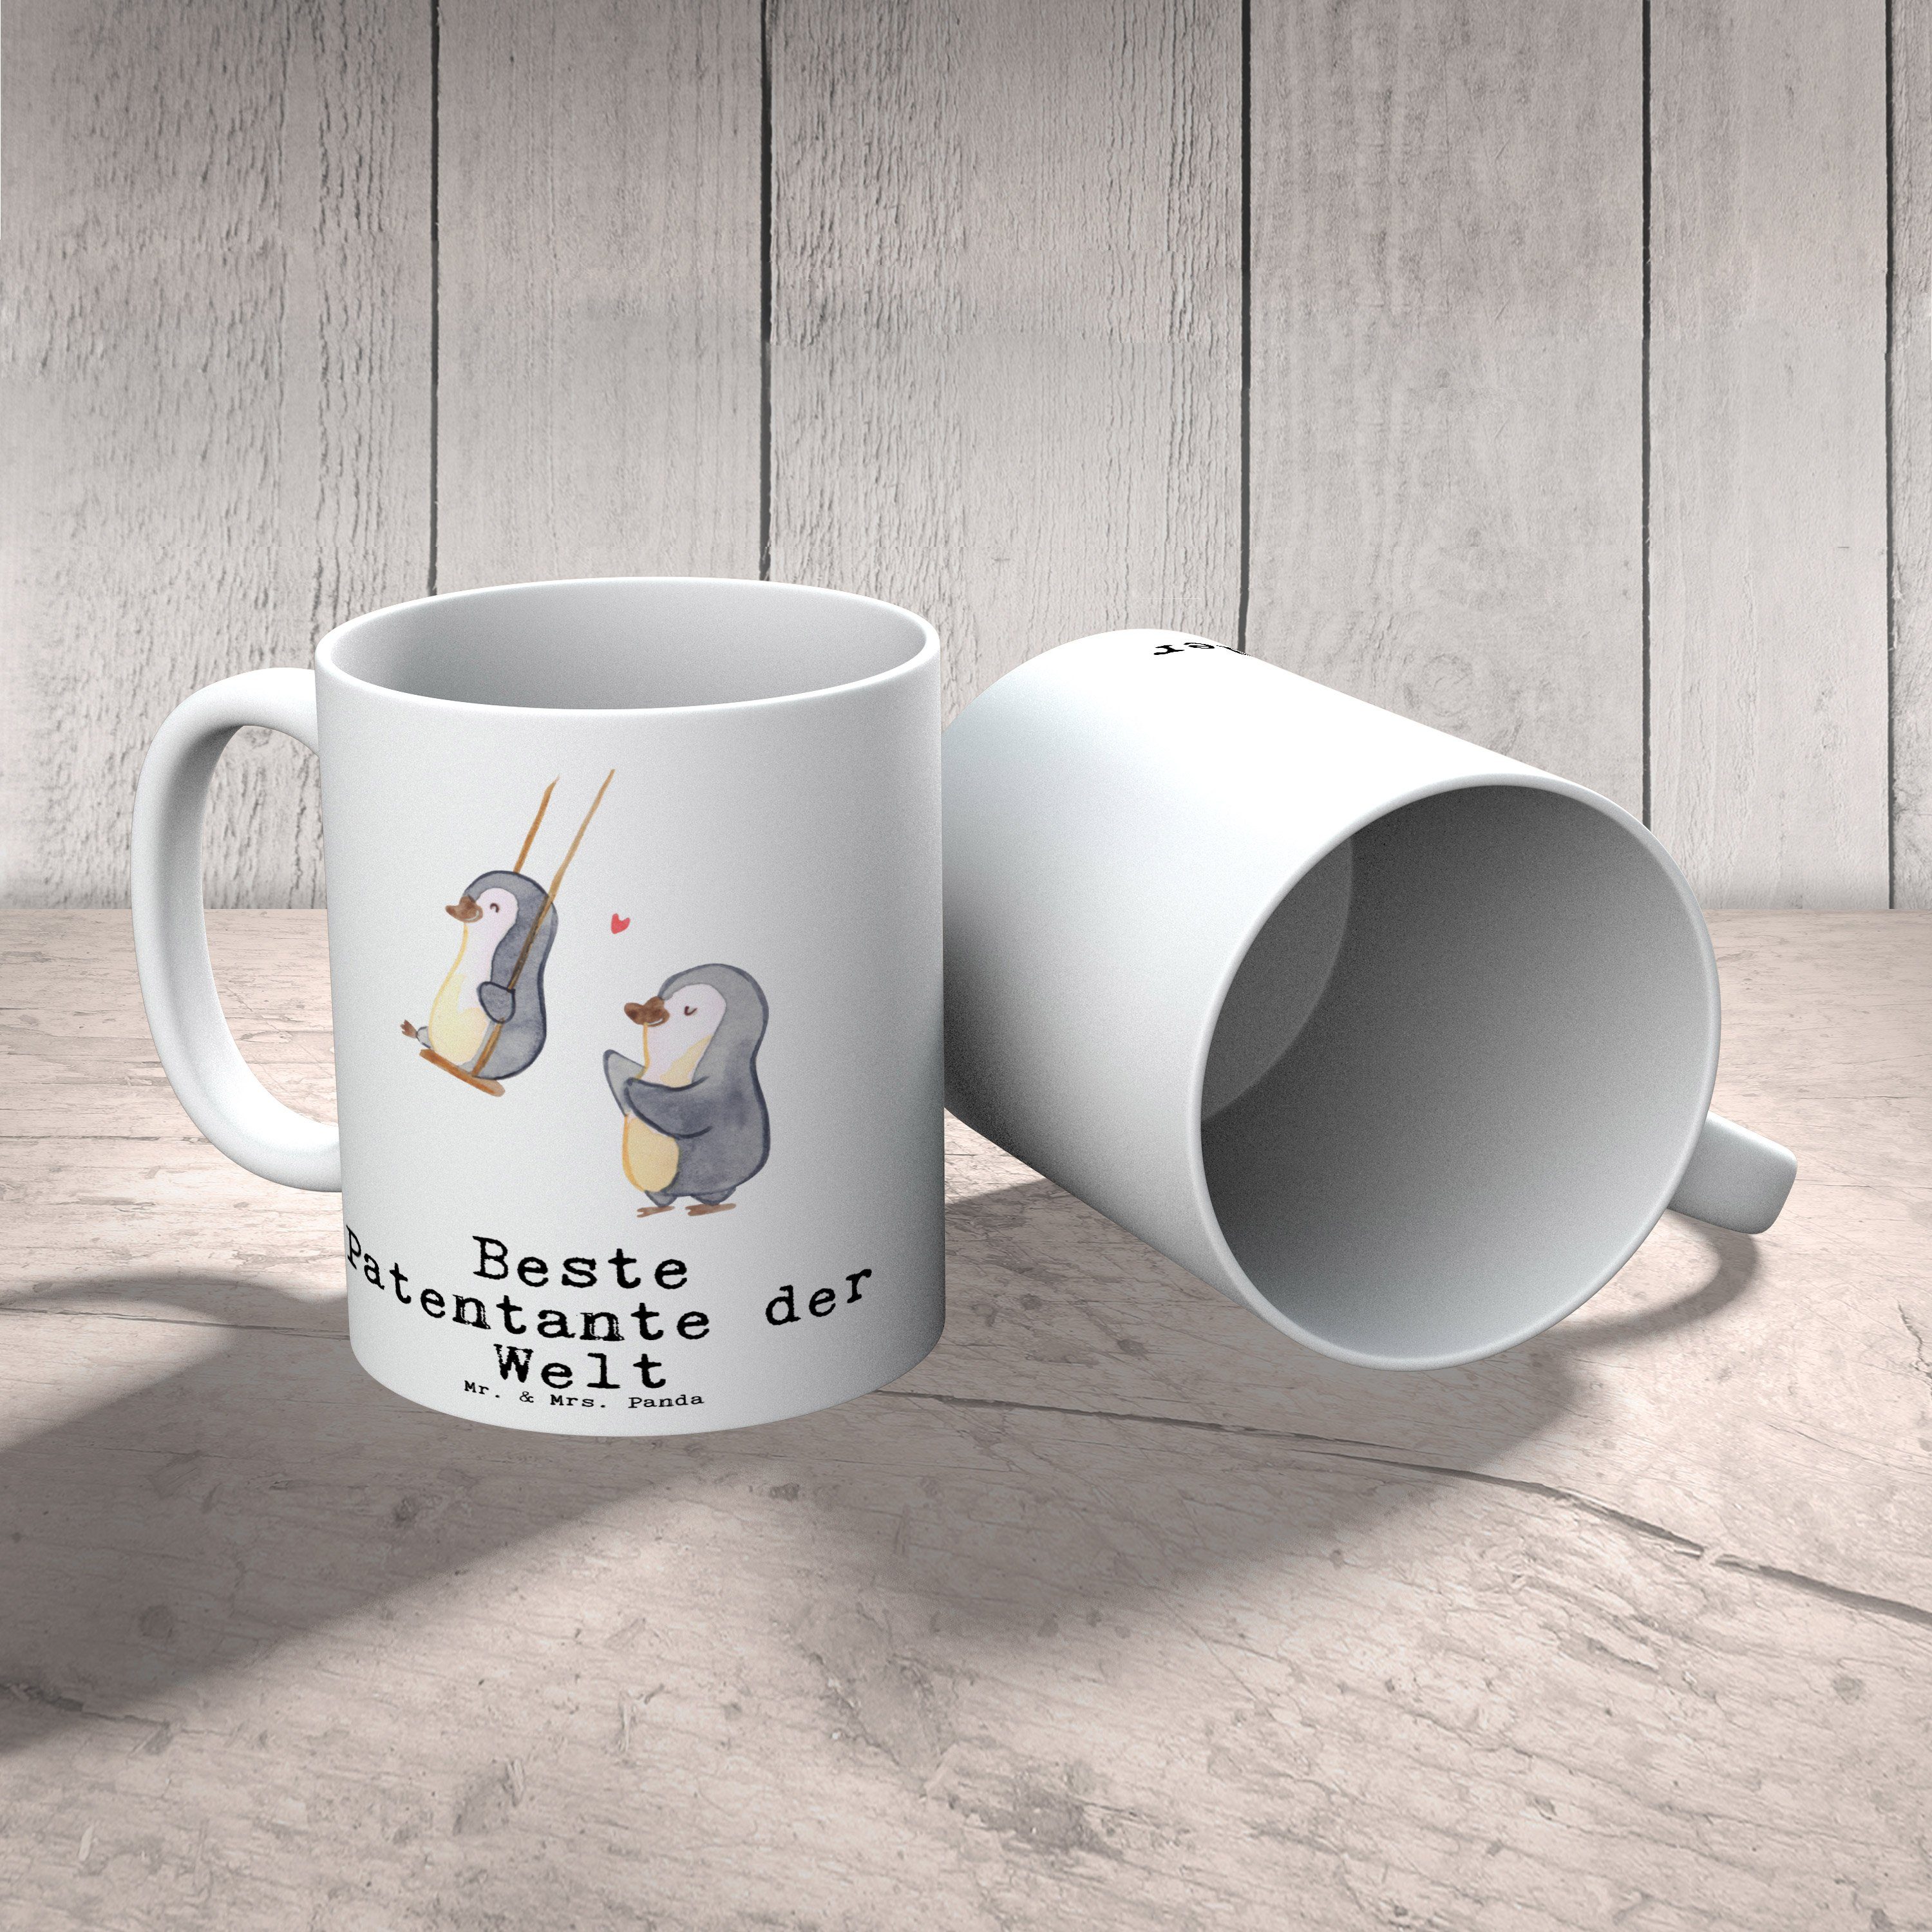 Mr. & Mrs. Panda Tasse Beste - Keramik Geschenk, Weiß Tee, Pinguin Taufpartner, Tante, Kaffeetasse, Patentante Paten Welt - Becher, Büro, der Kaffeebecher, Mitbringsel, Dankeschön